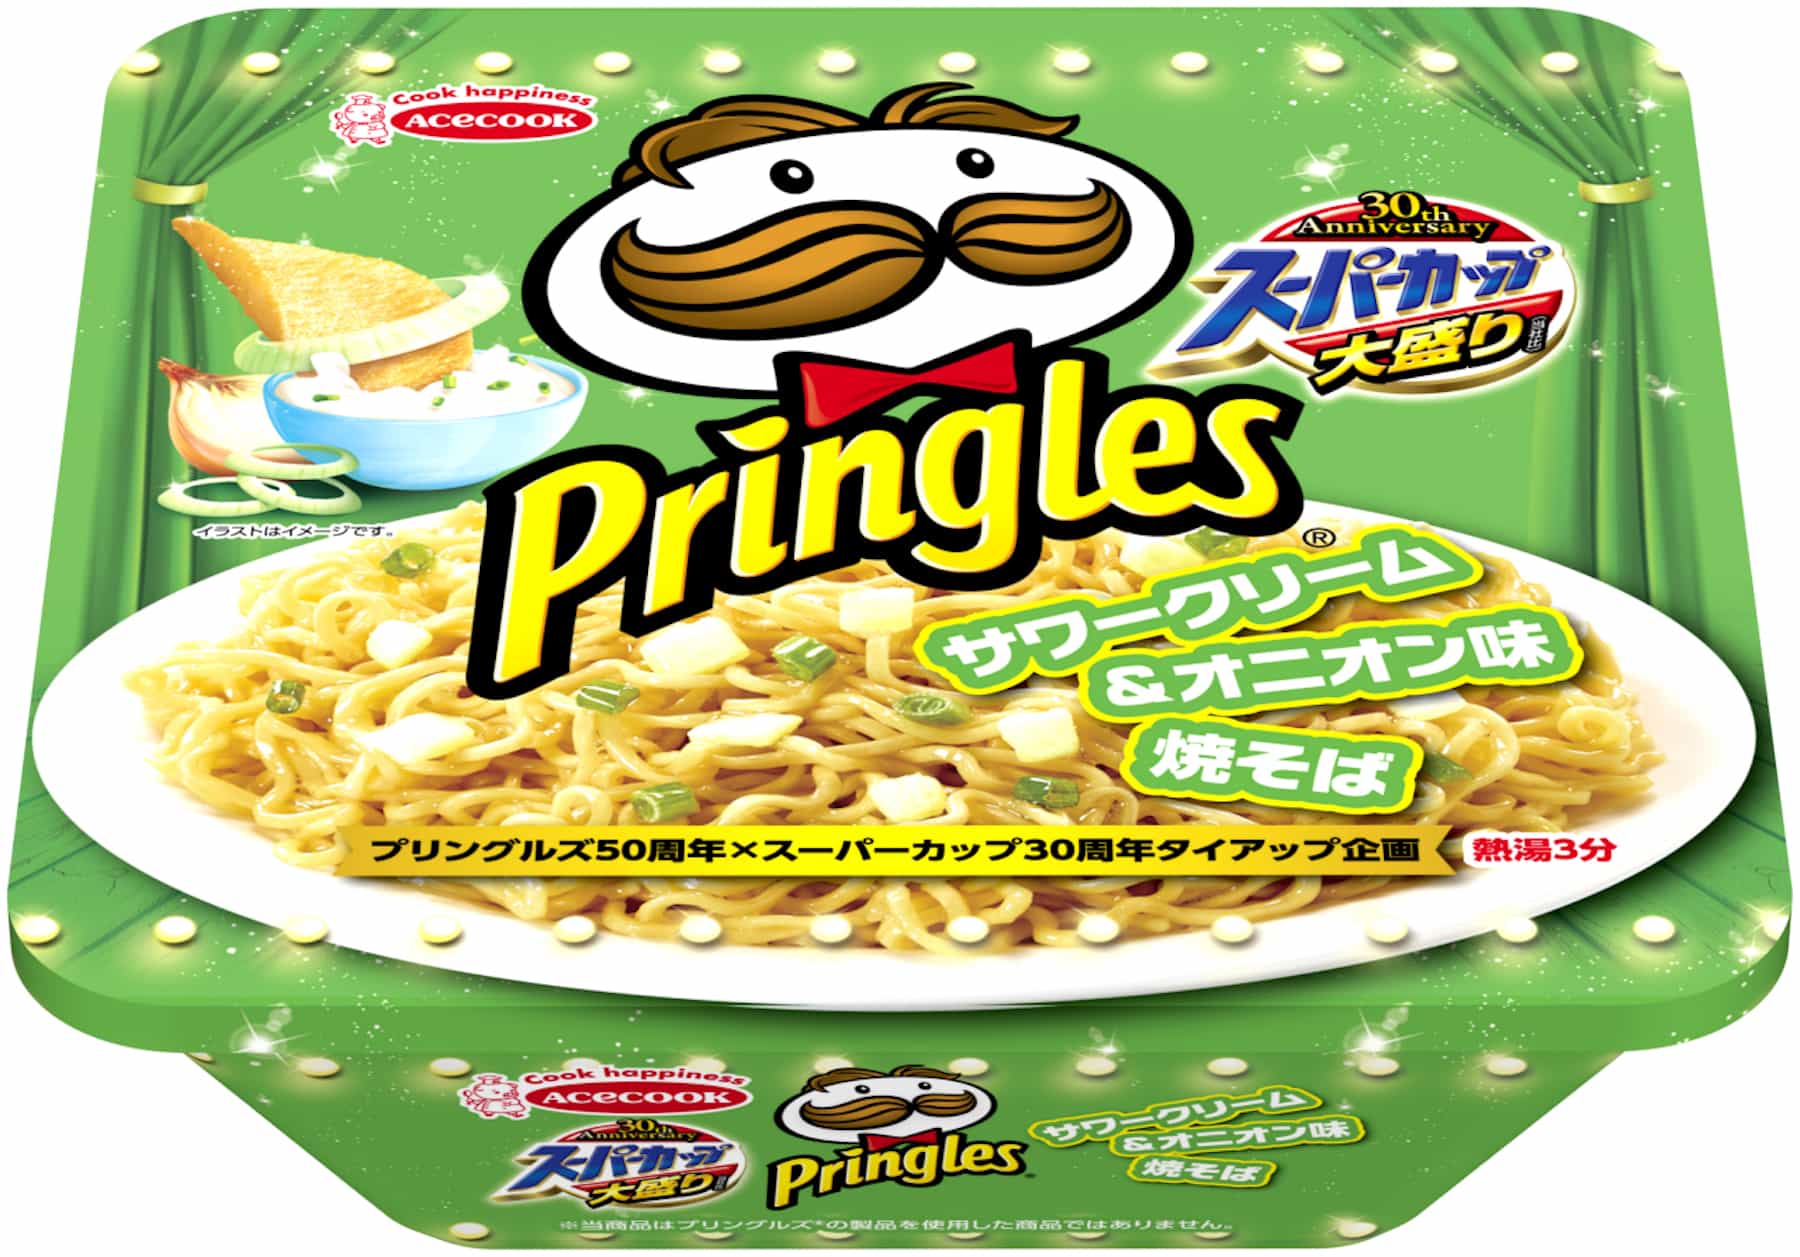 pringles-japan-super-cup-cup-noodles-japanese-instant-ramen-6